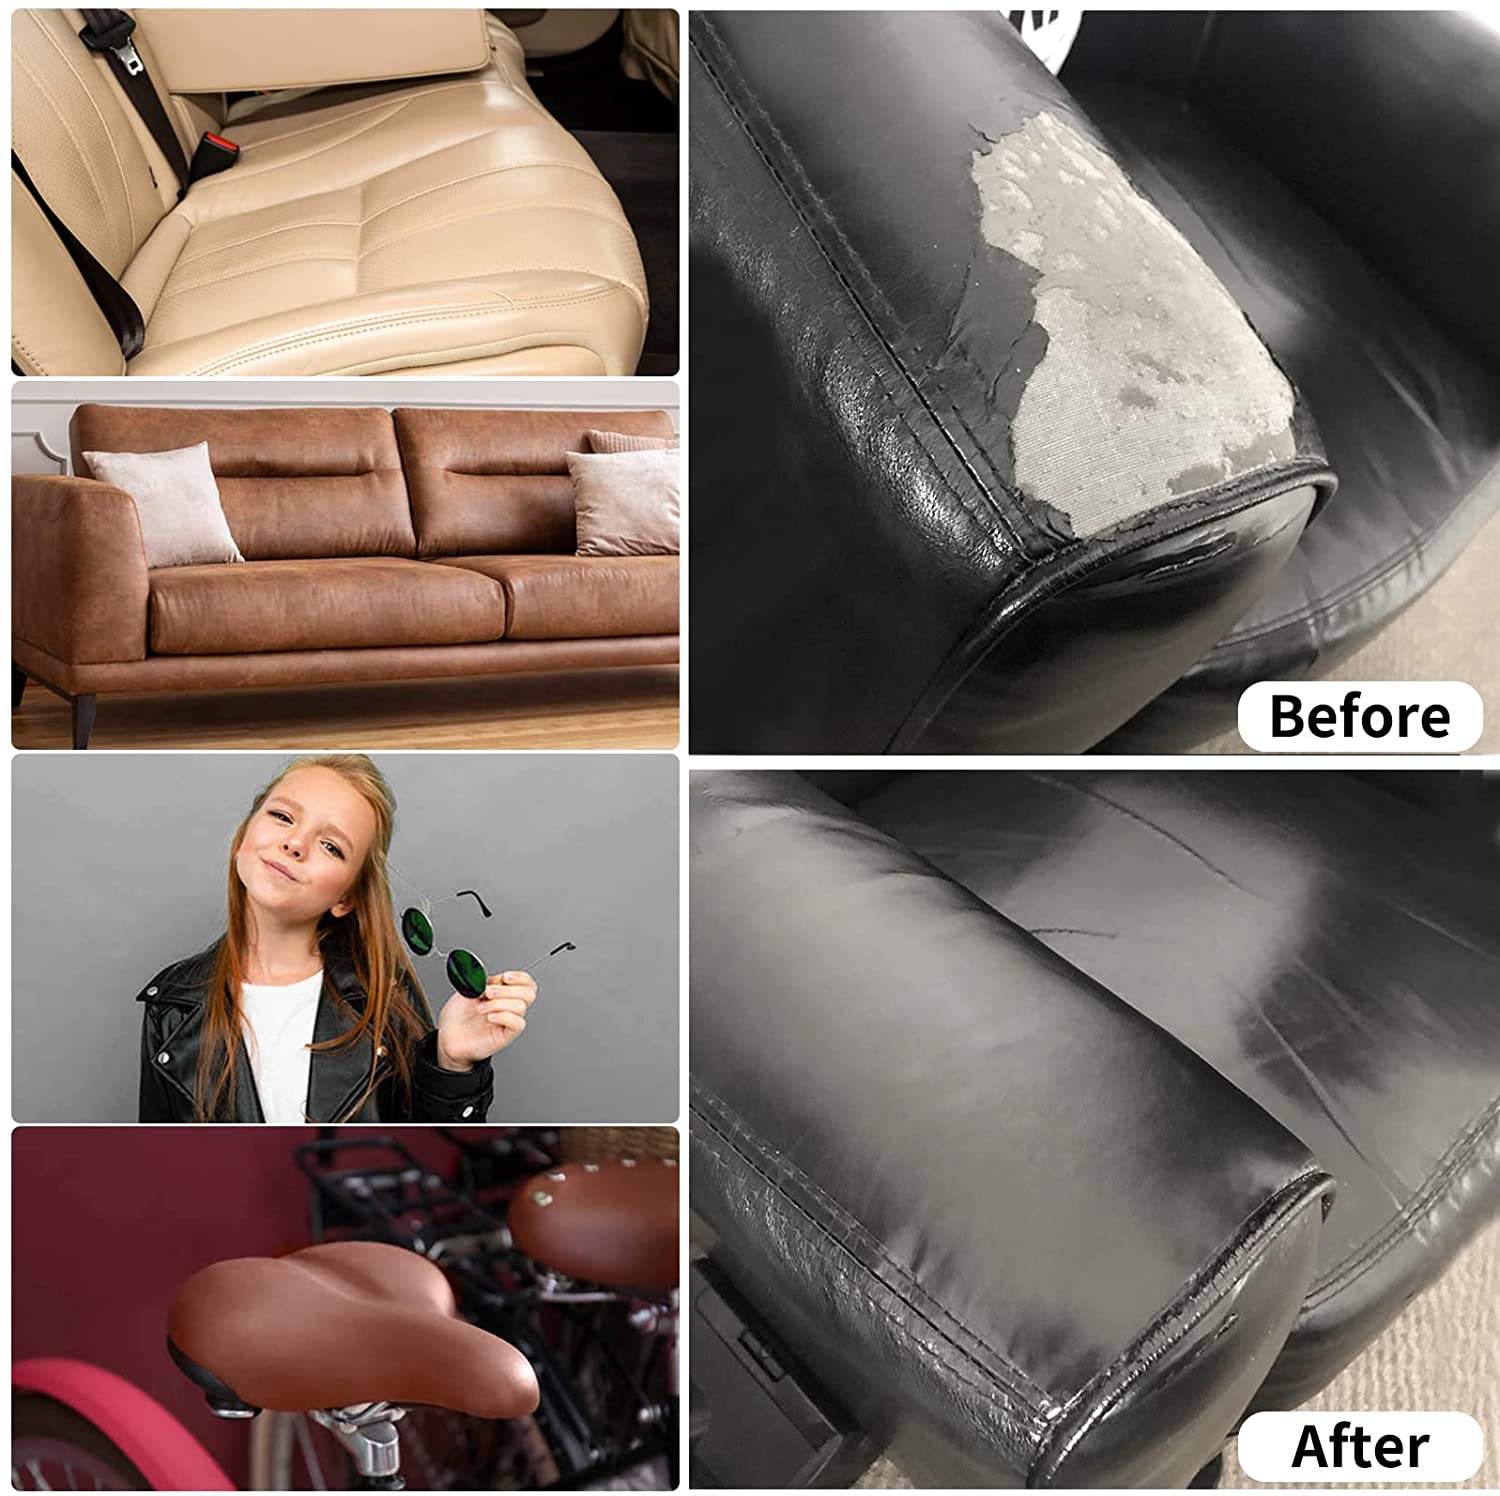 Memotoo Leather Repair Patch, Vinyl Repair Kit, Self-Adhesive Leather  Repair Tape for Sofas, Drivers Car Seat, Couch, Handbags, Jackets (Gray,  8×11 inch)… 